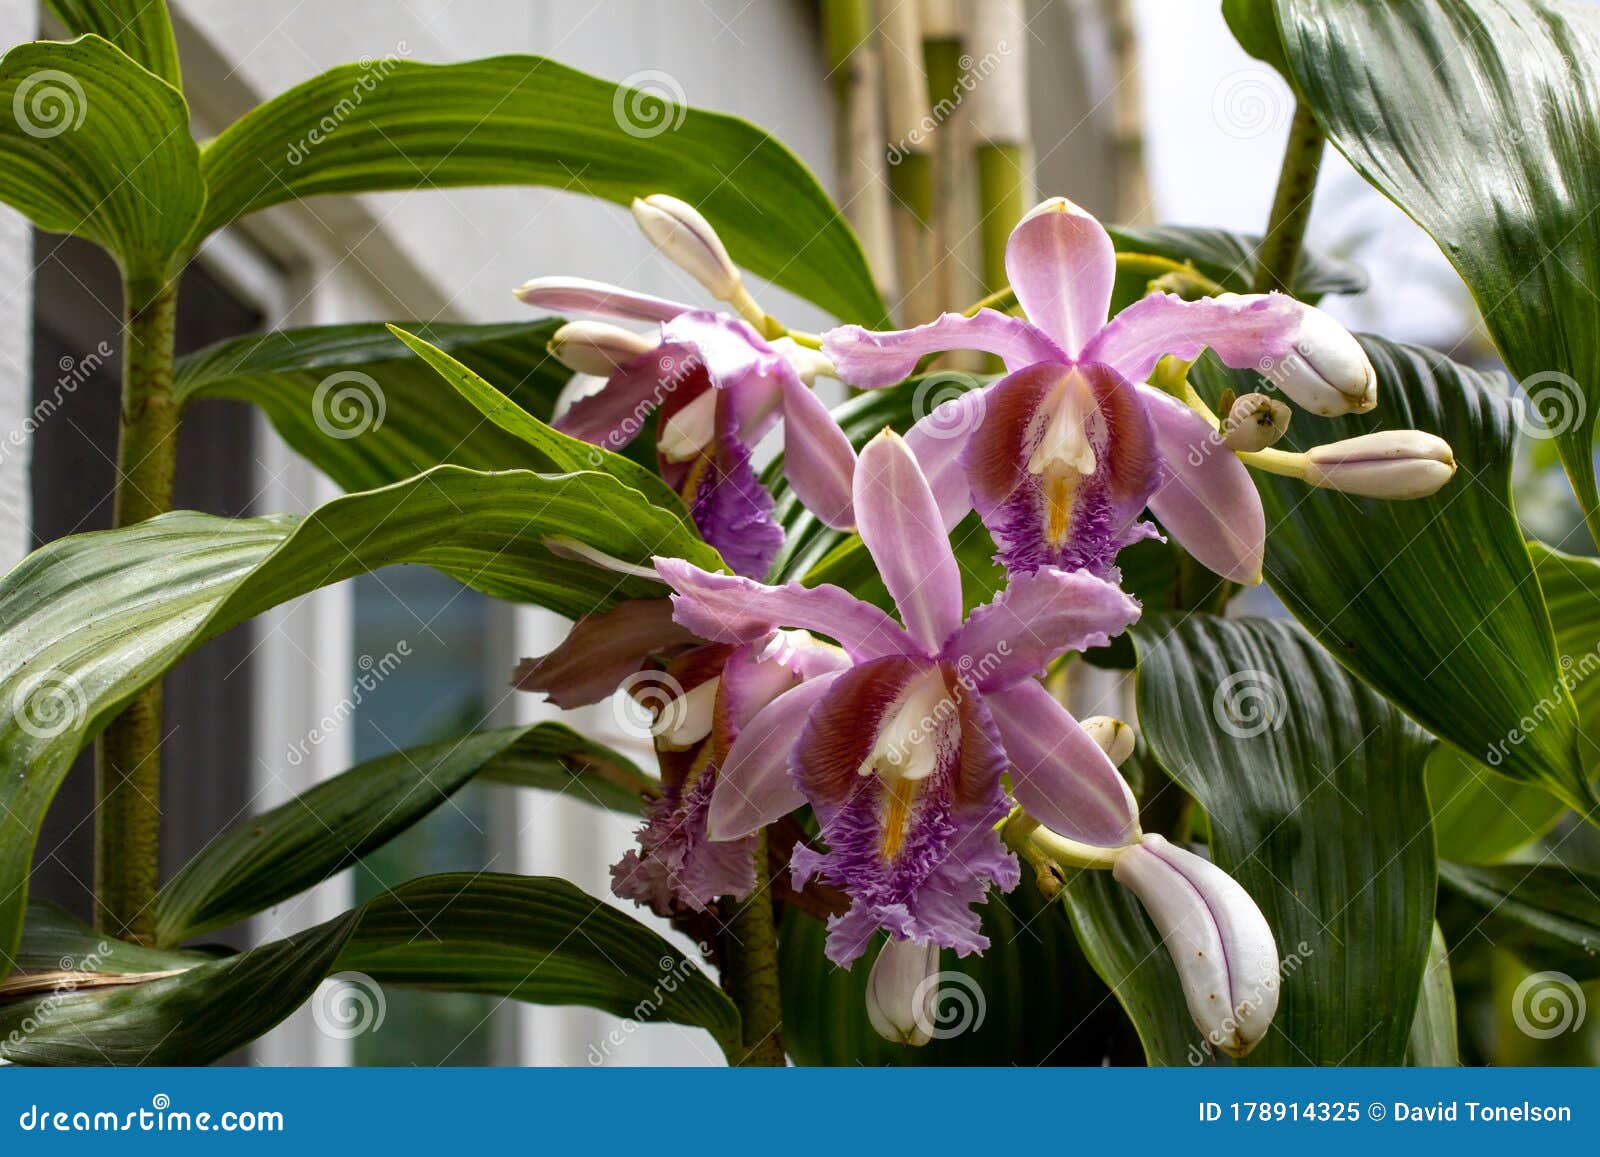 Sobralia orchid stock image. Image of greenhouse, exotic - 178914325